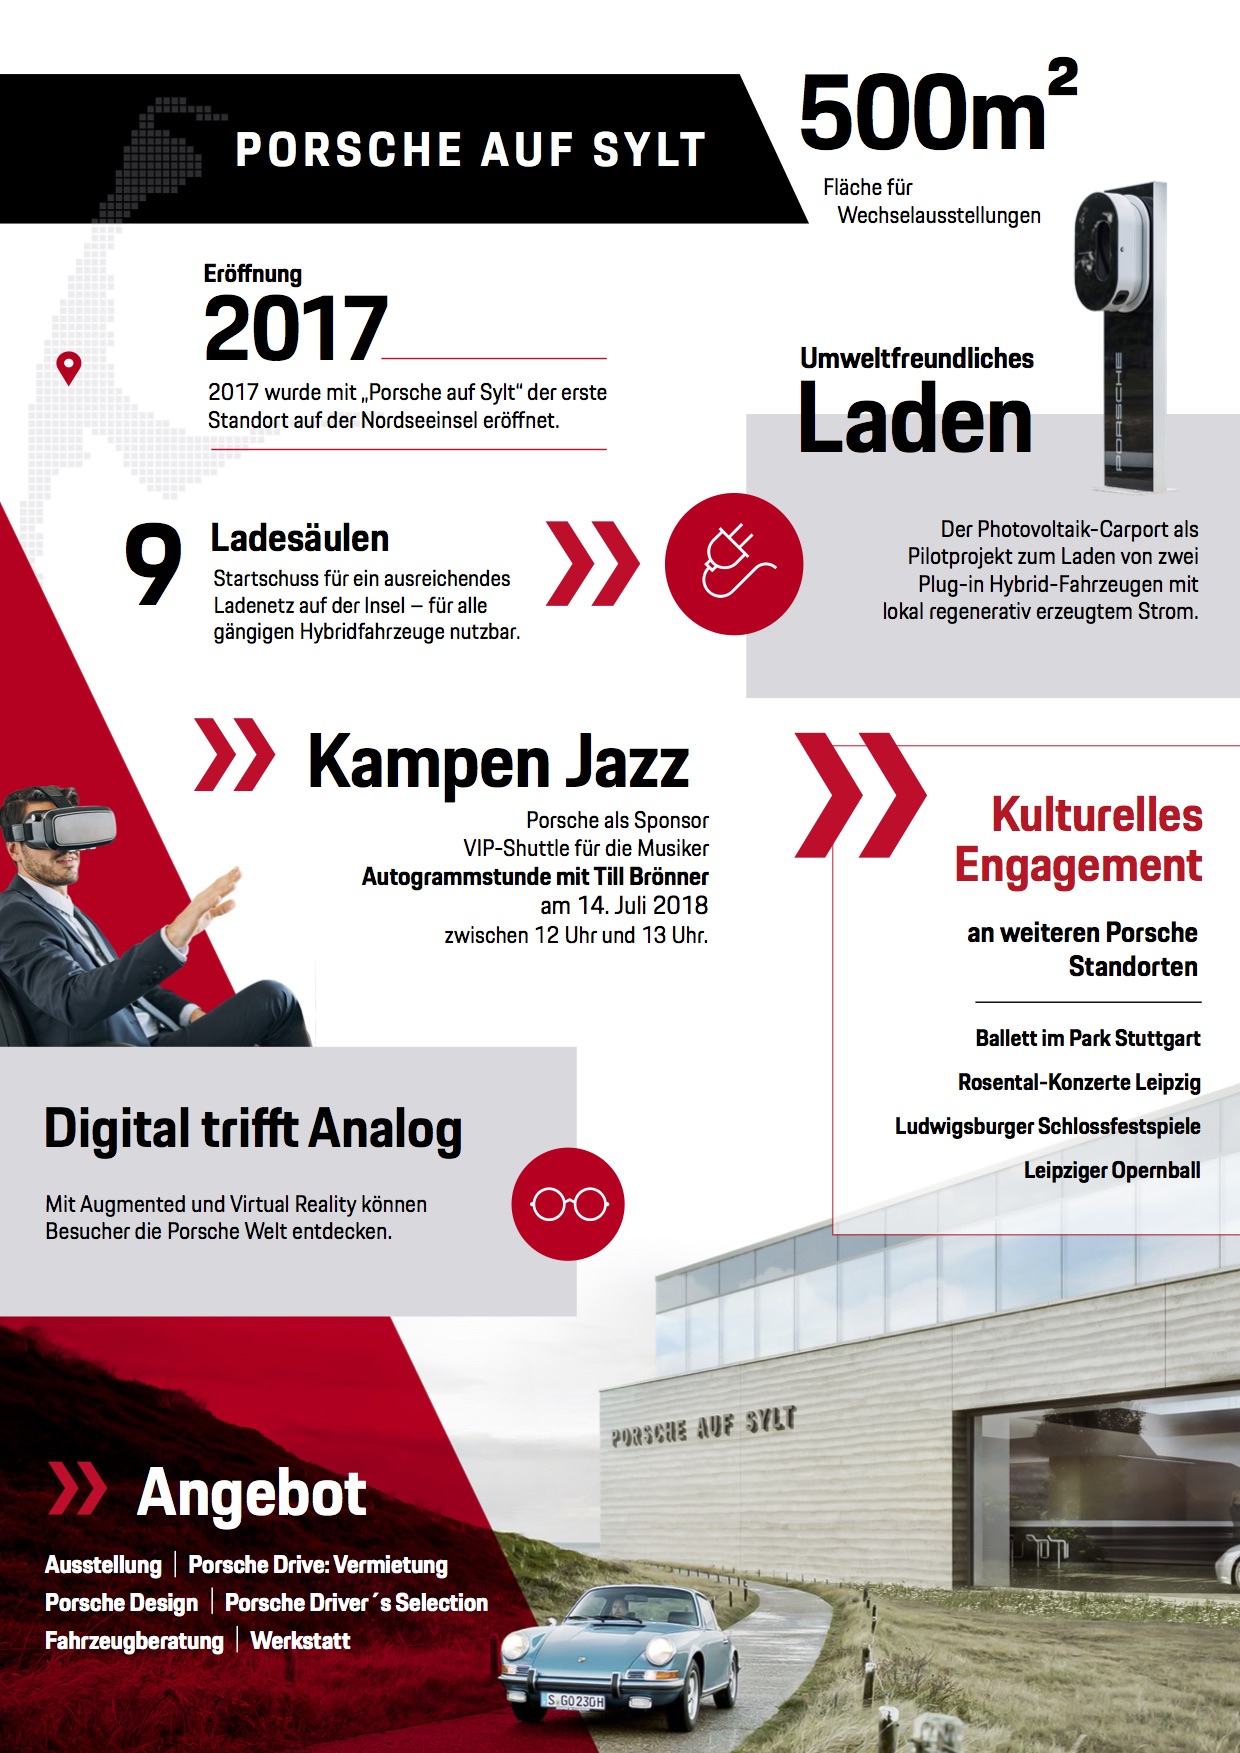 Porsche auf Sylt, Infografik, 2018, Porsche AG